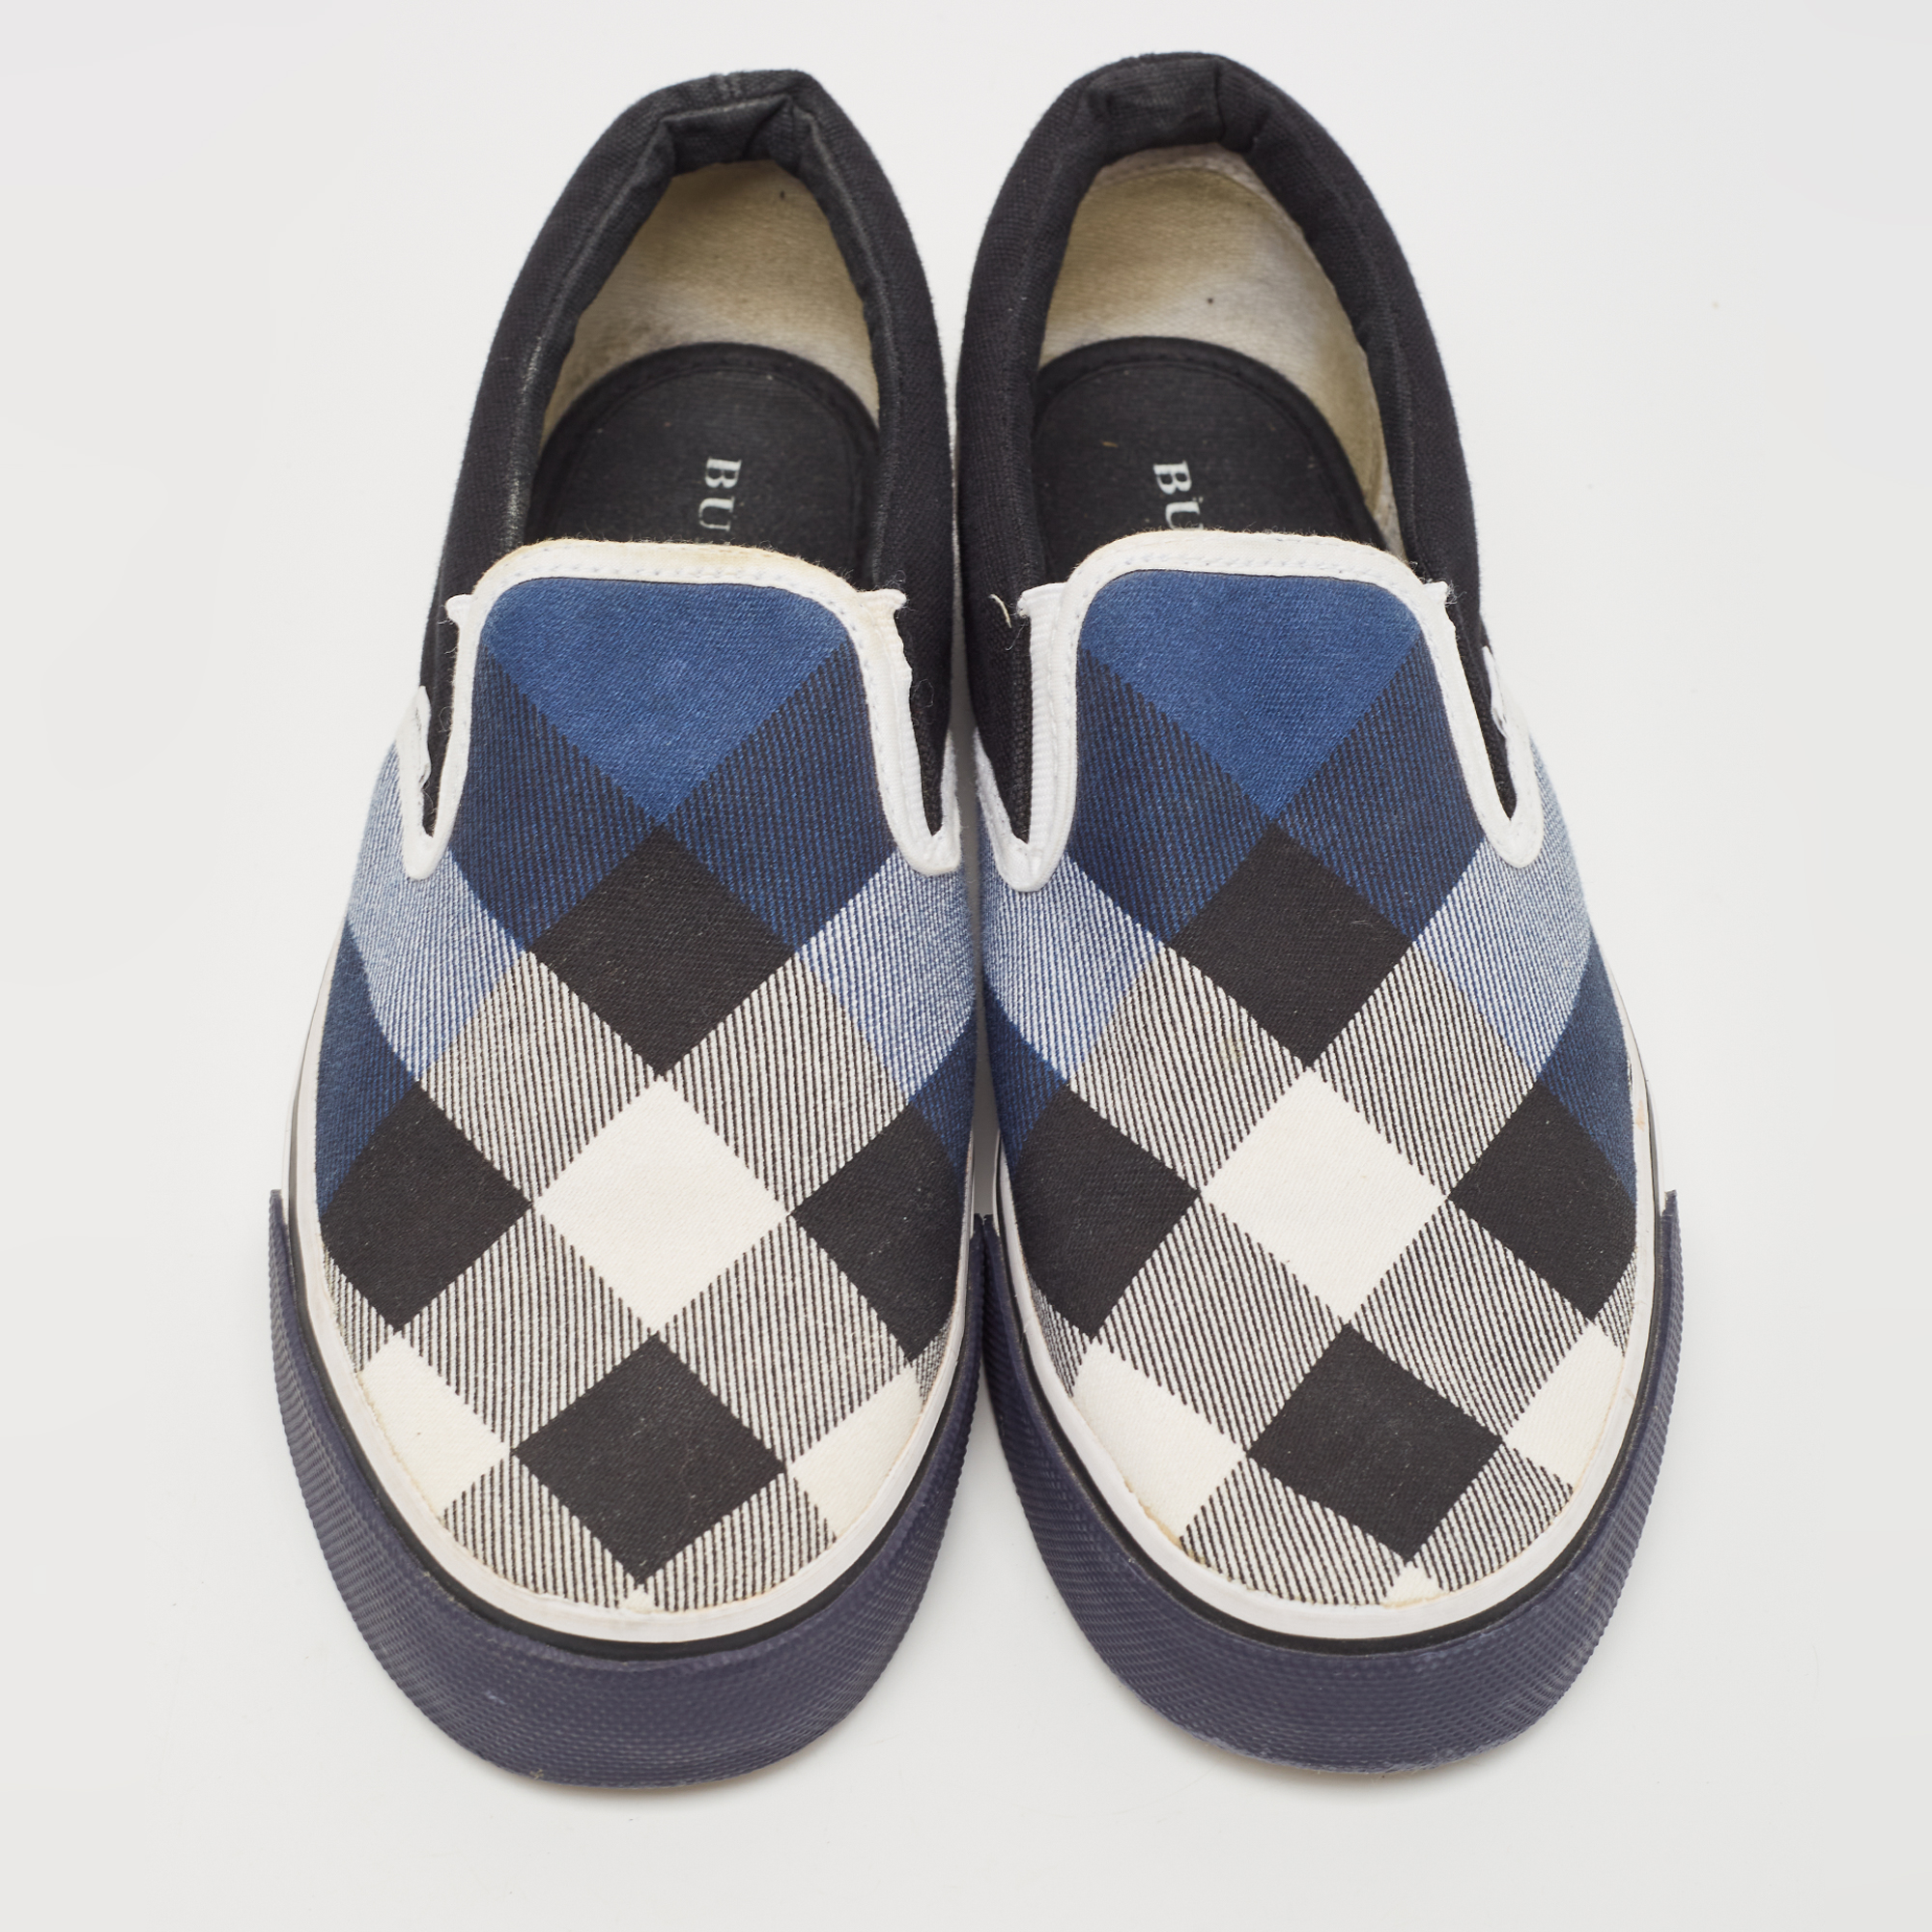 Burberry Tricolor Nova Check Canvas Slip On Sneakers Size 38